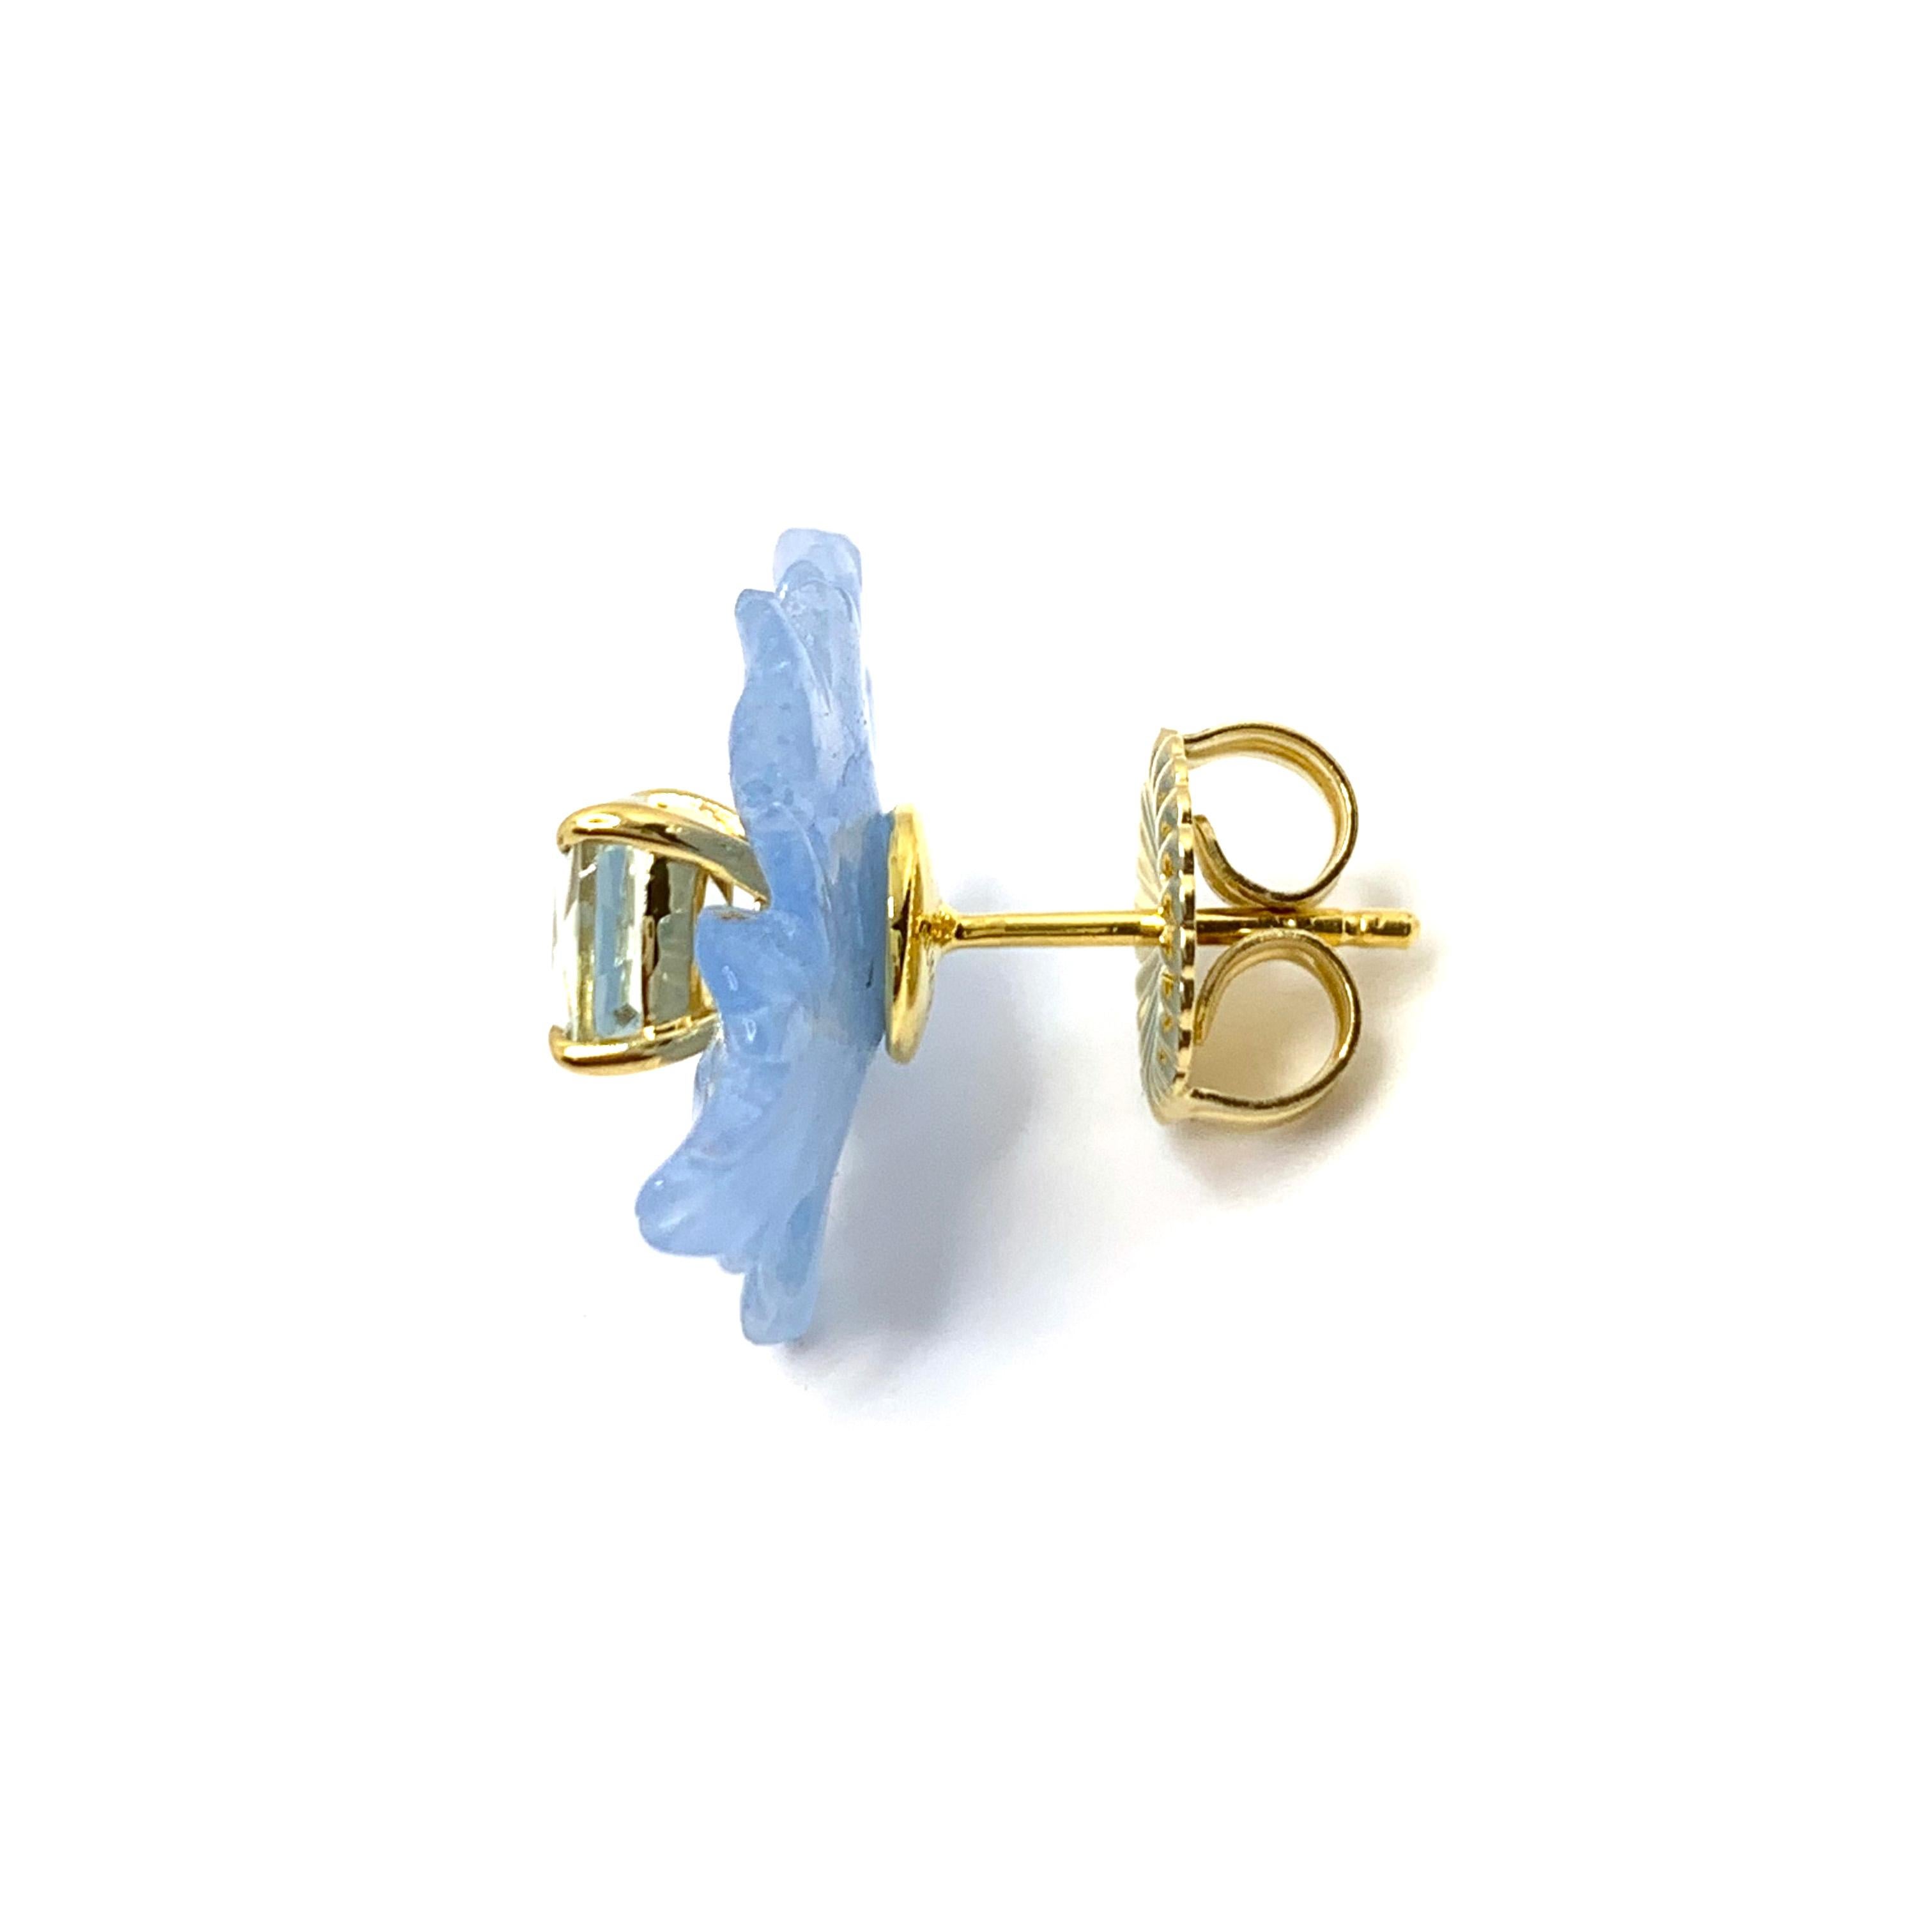 Mixed Cut 18mm Carved Blue Quartzite Flower and Cushion prasiolite Vermeil Earrings